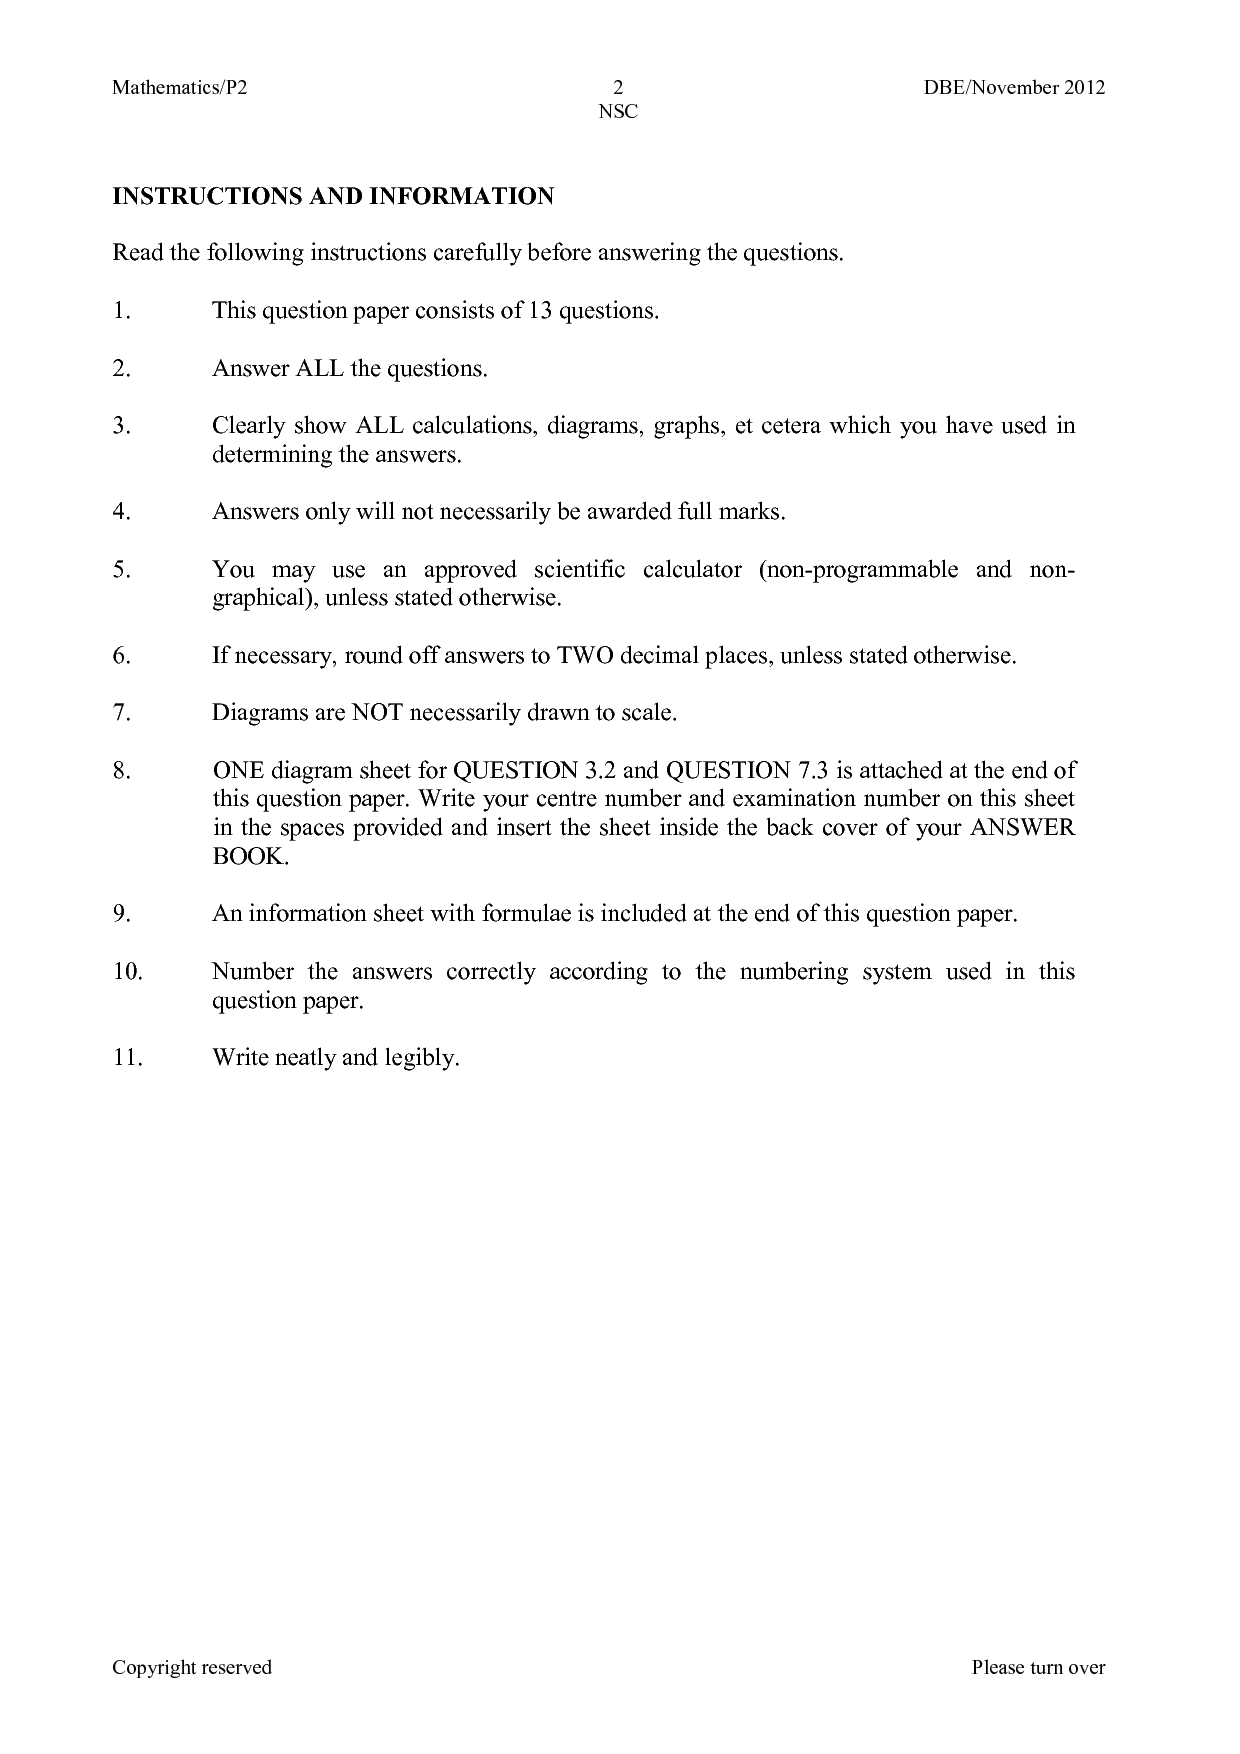 Commission Worksheet Math 012 Answer Key